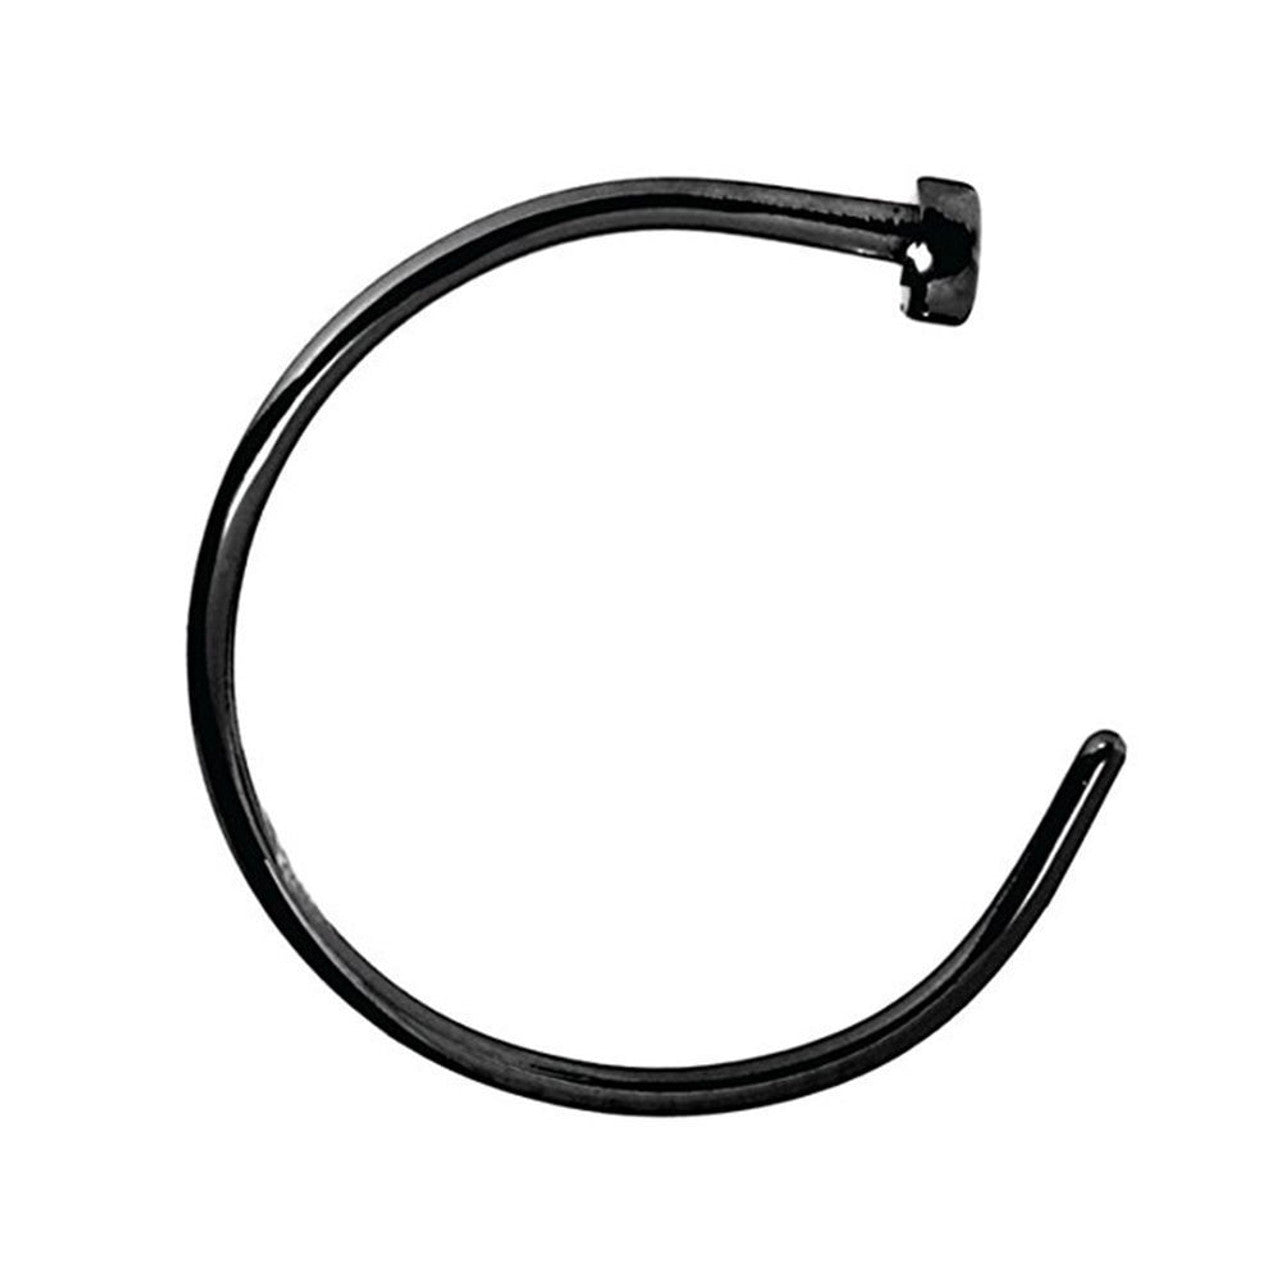 Surgical Steel Nose Ring Hoop 22 Gauge (0.75mm) 5/16" - 7 Colors